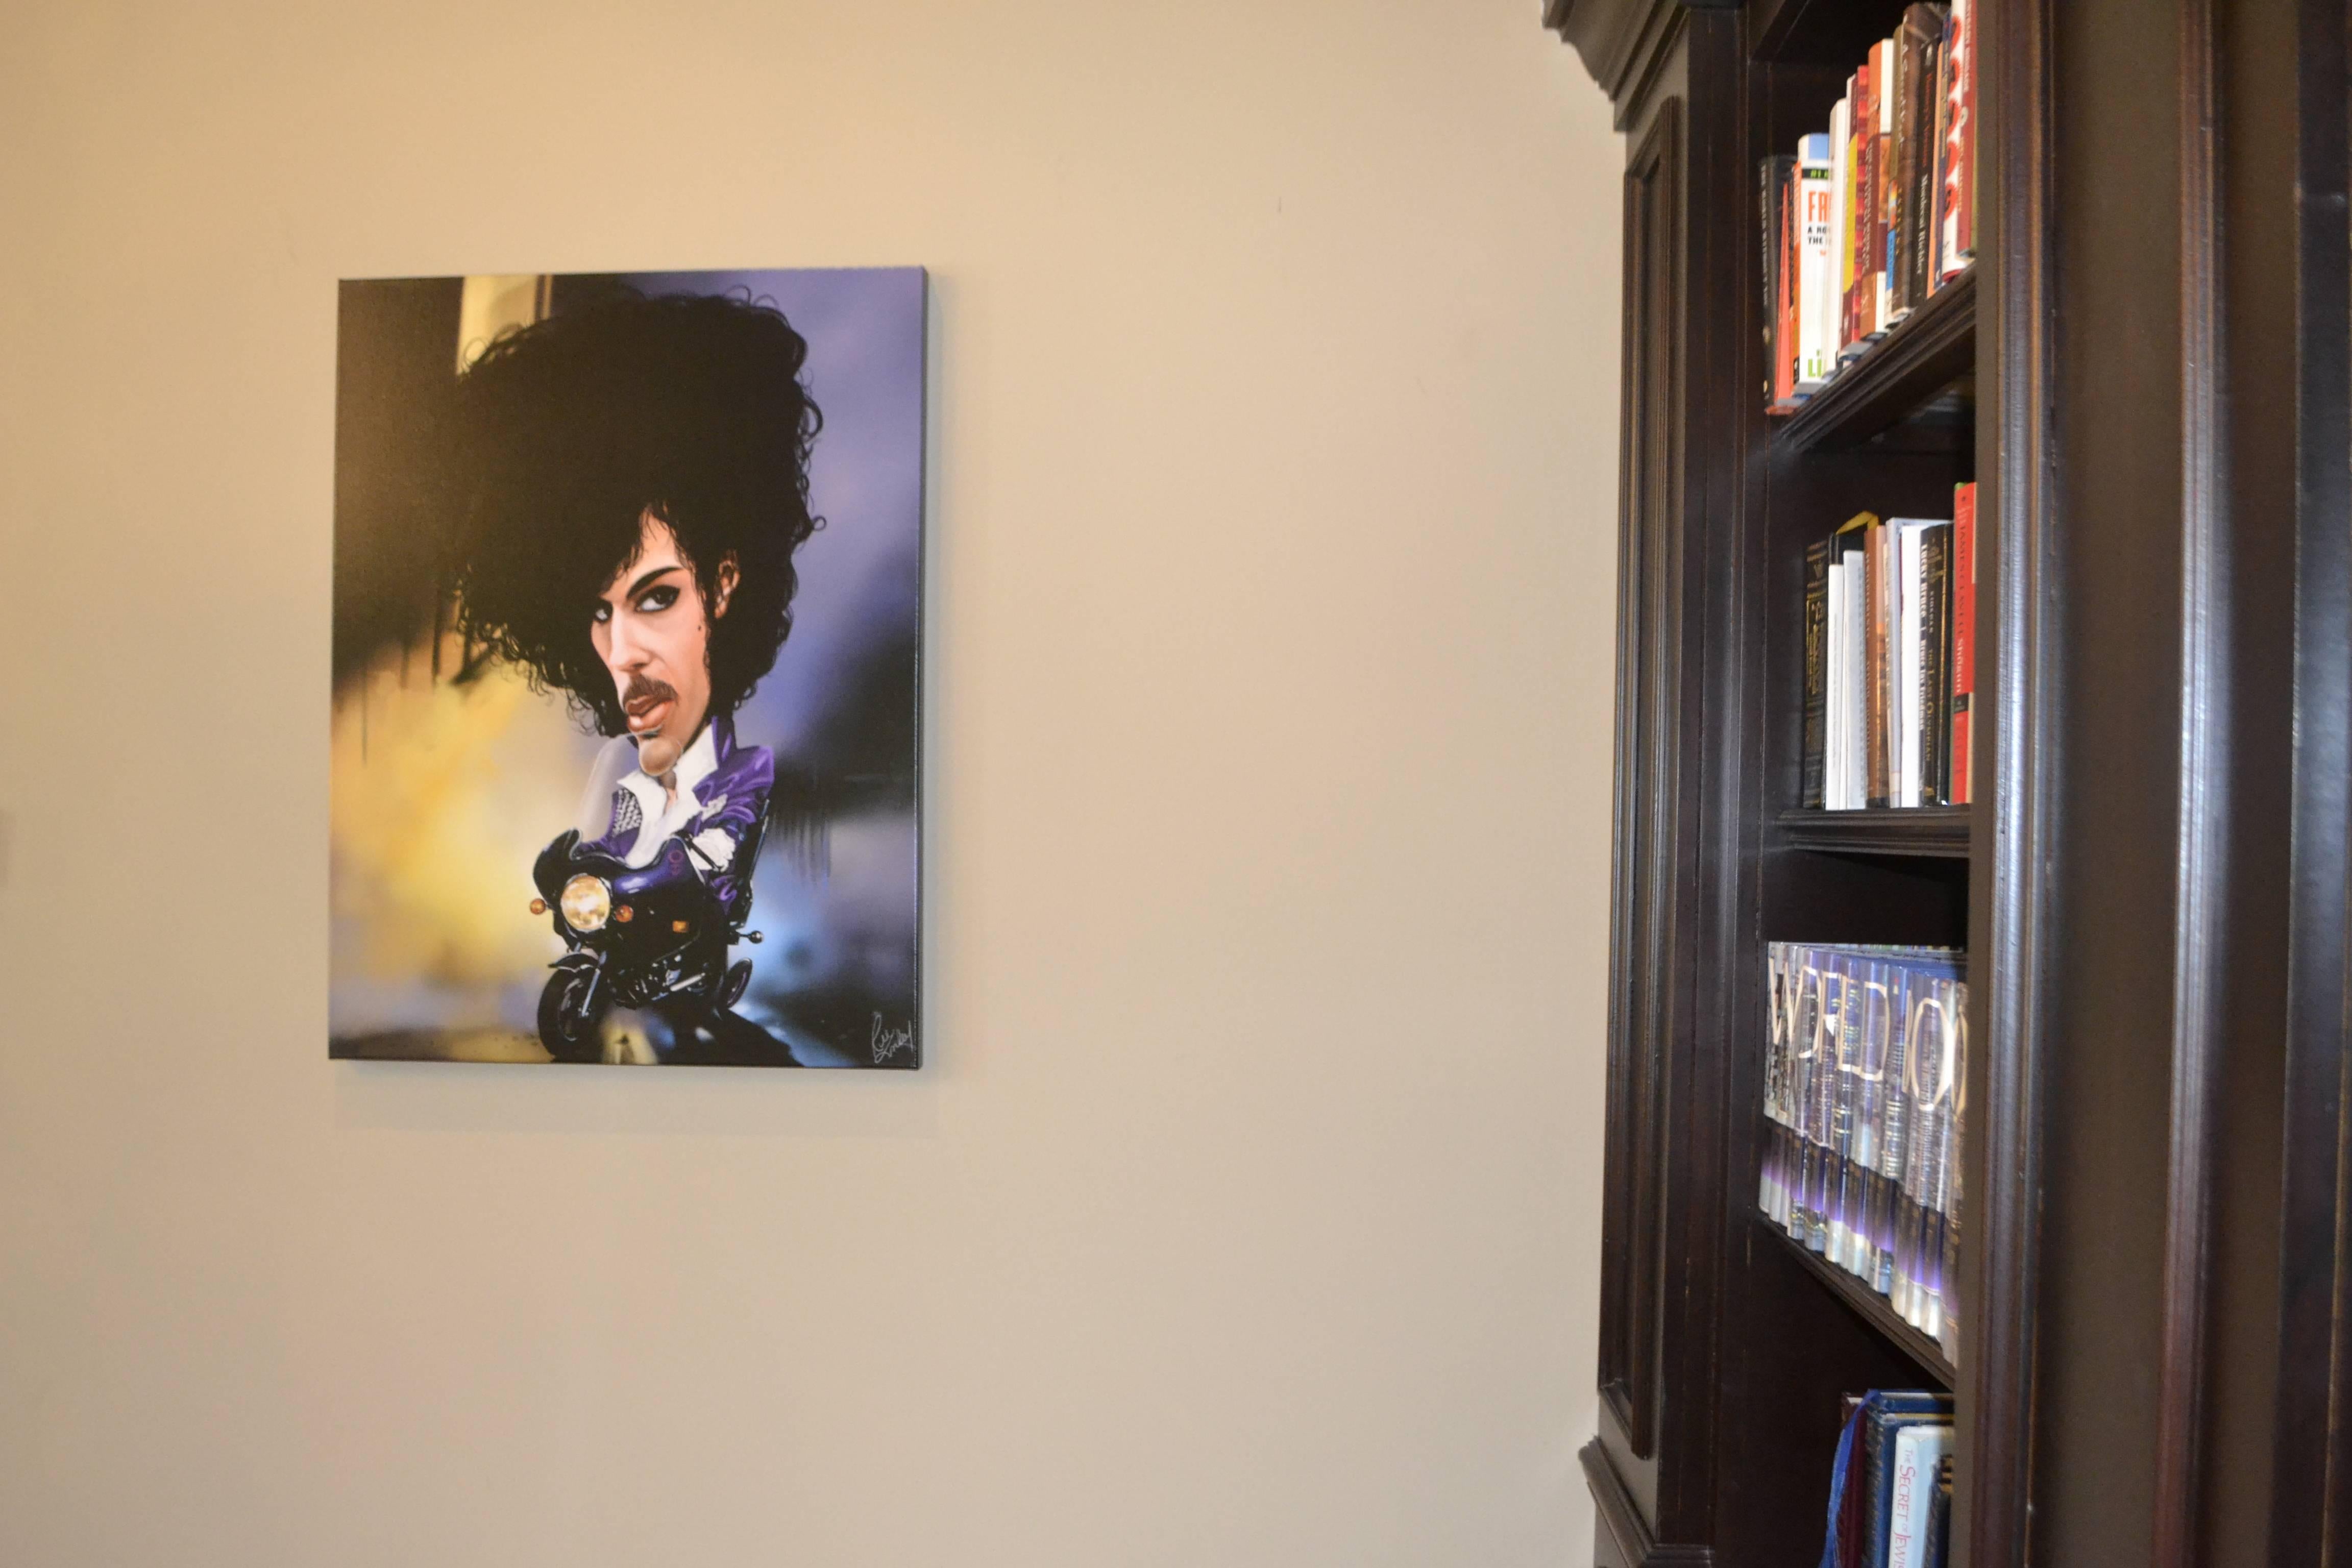 Prince Purple Rain 9 x 12 Limited Edition on Canvas - Pop Art Print by Rich Conley